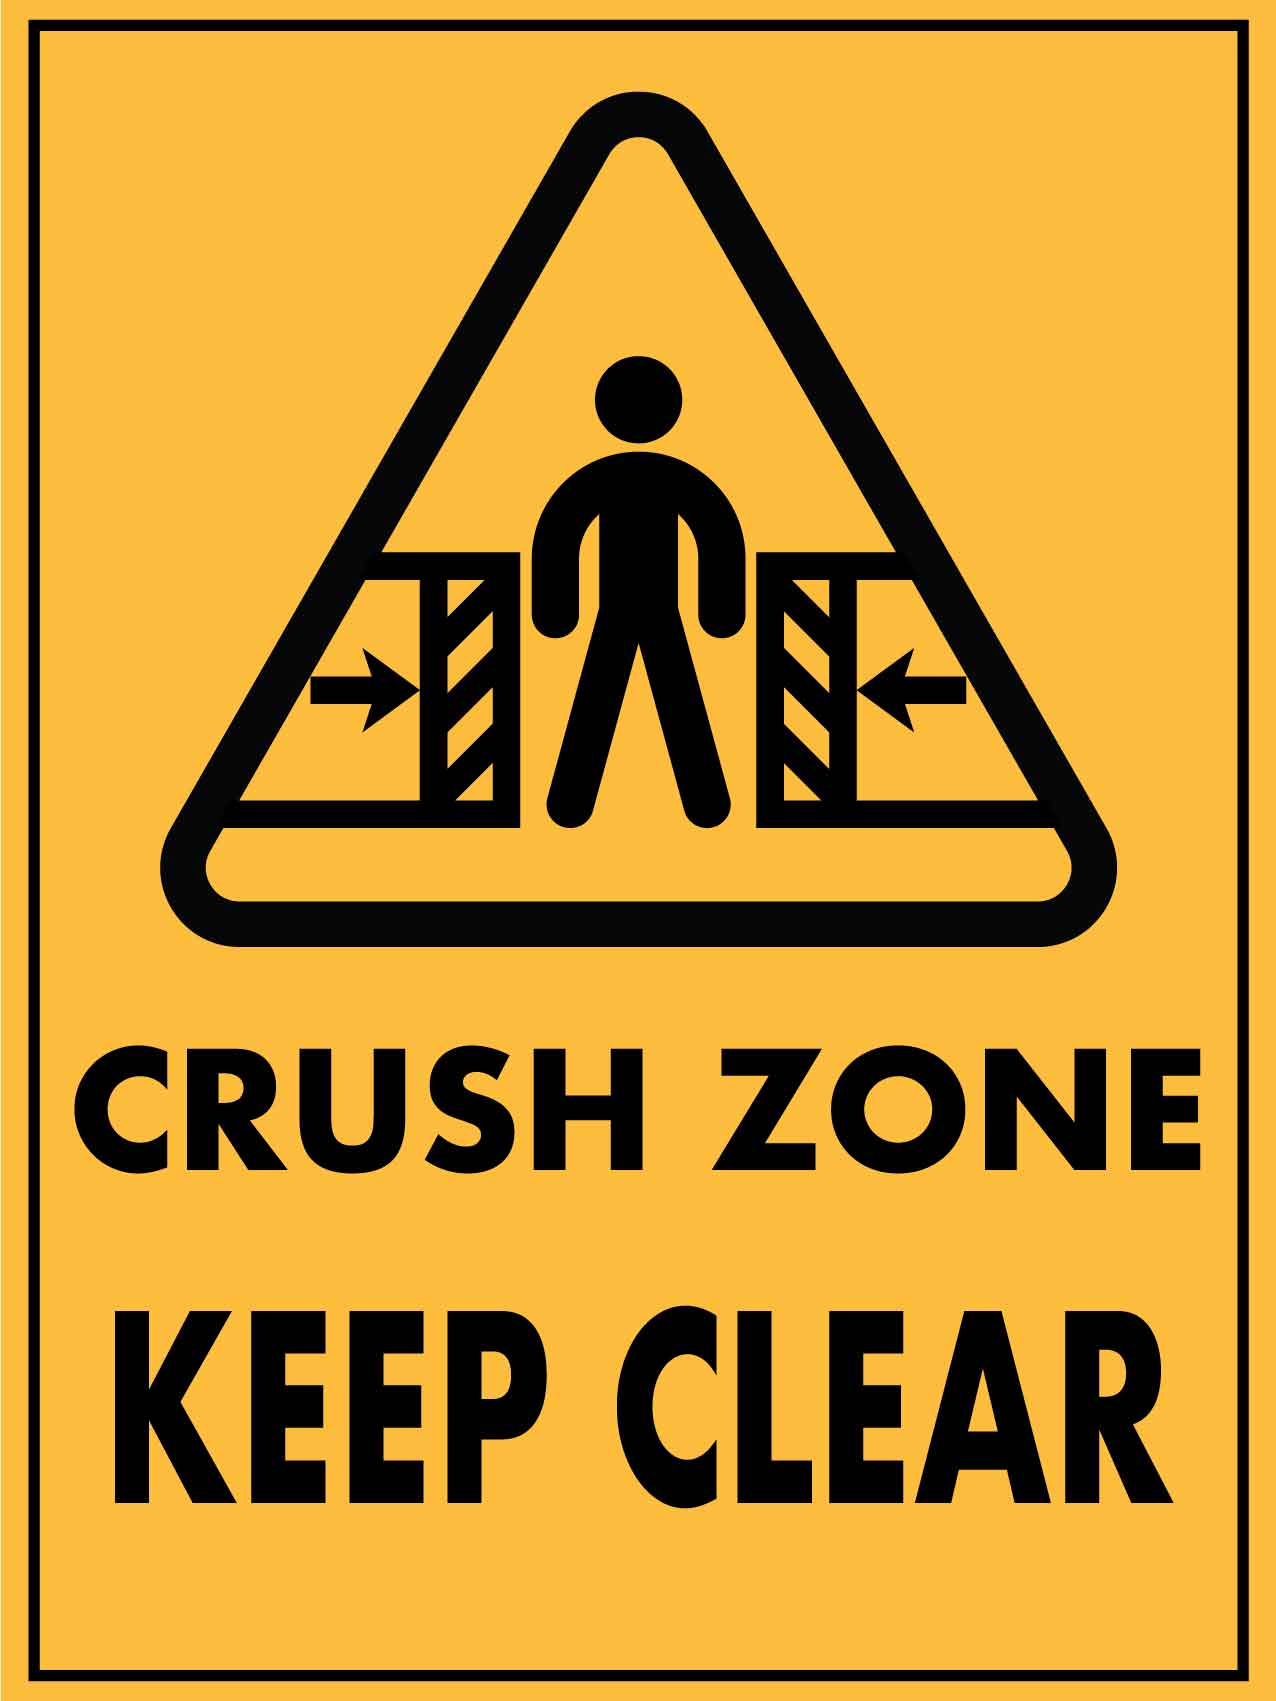 Crush Zone Keep Clear Sign